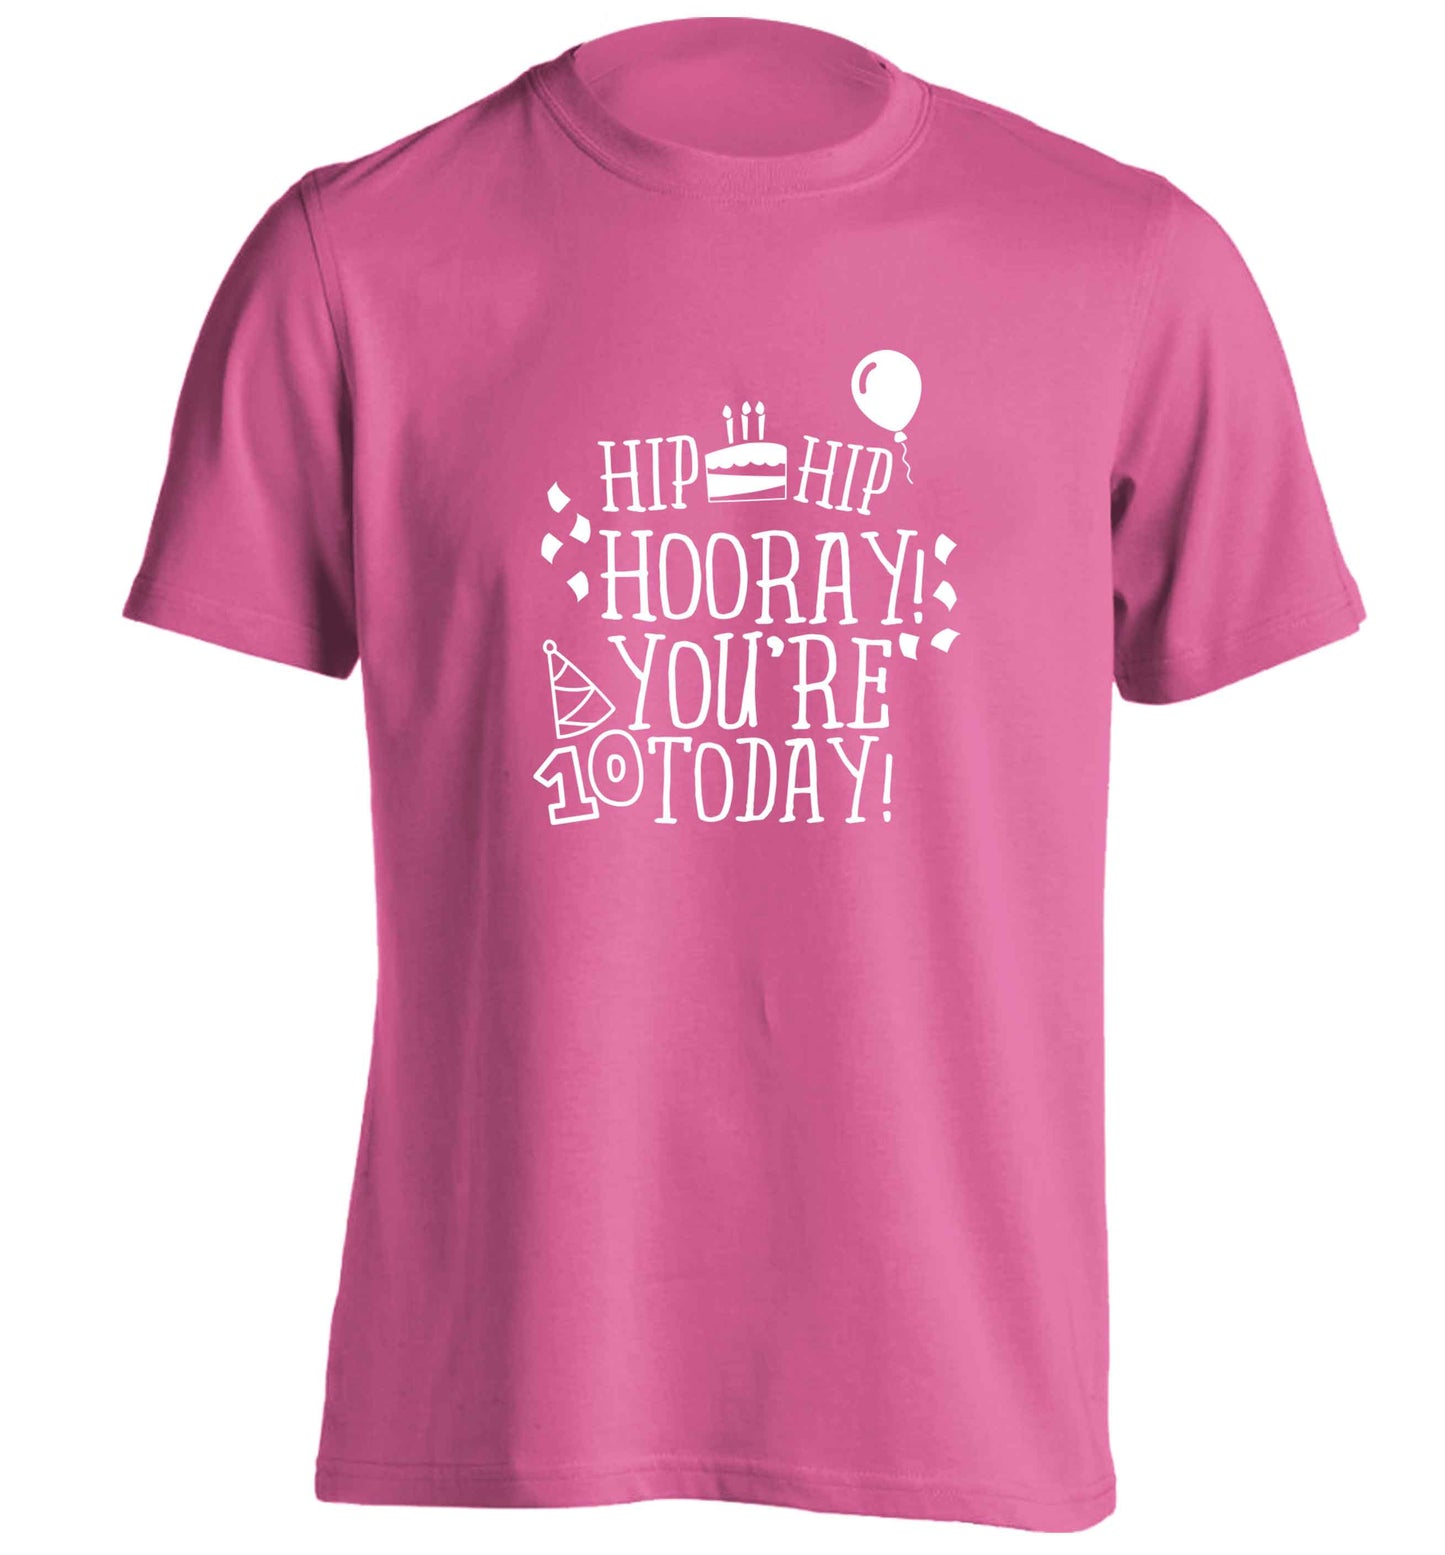 Hip hip hooray you're ten today! adults unisex pink Tshirt 2XL